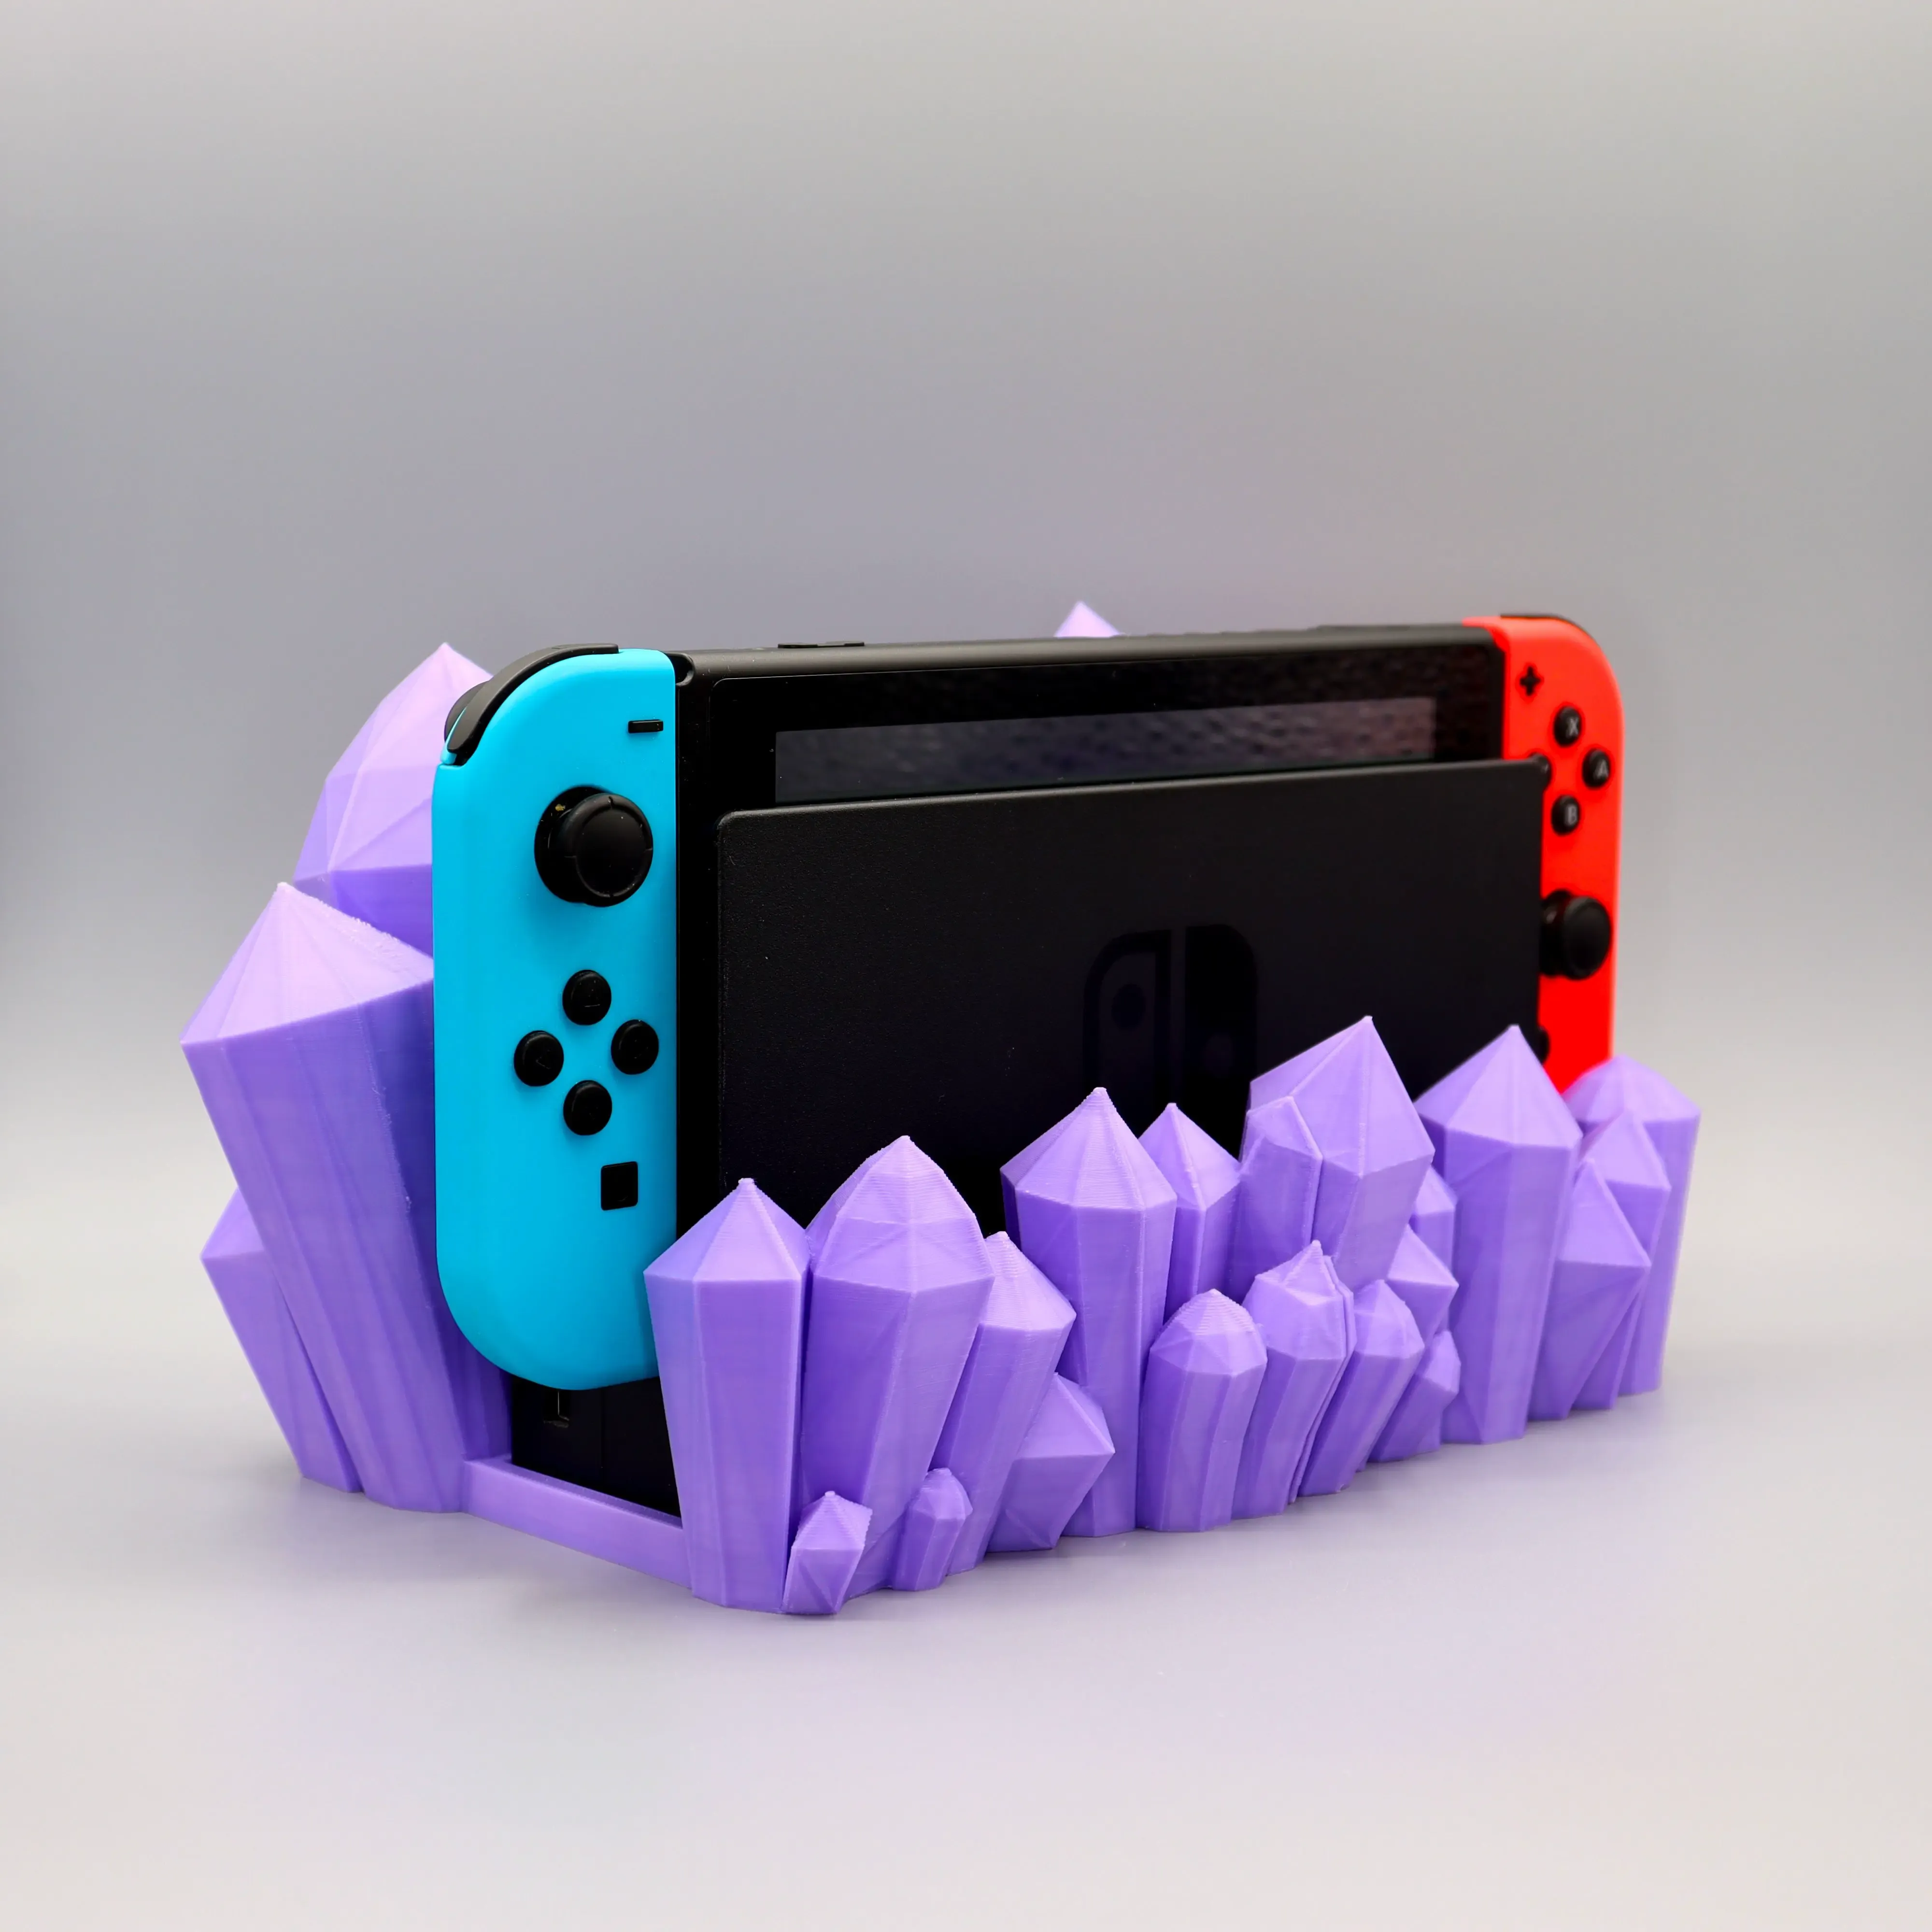 Crystal Nintendo switch dock